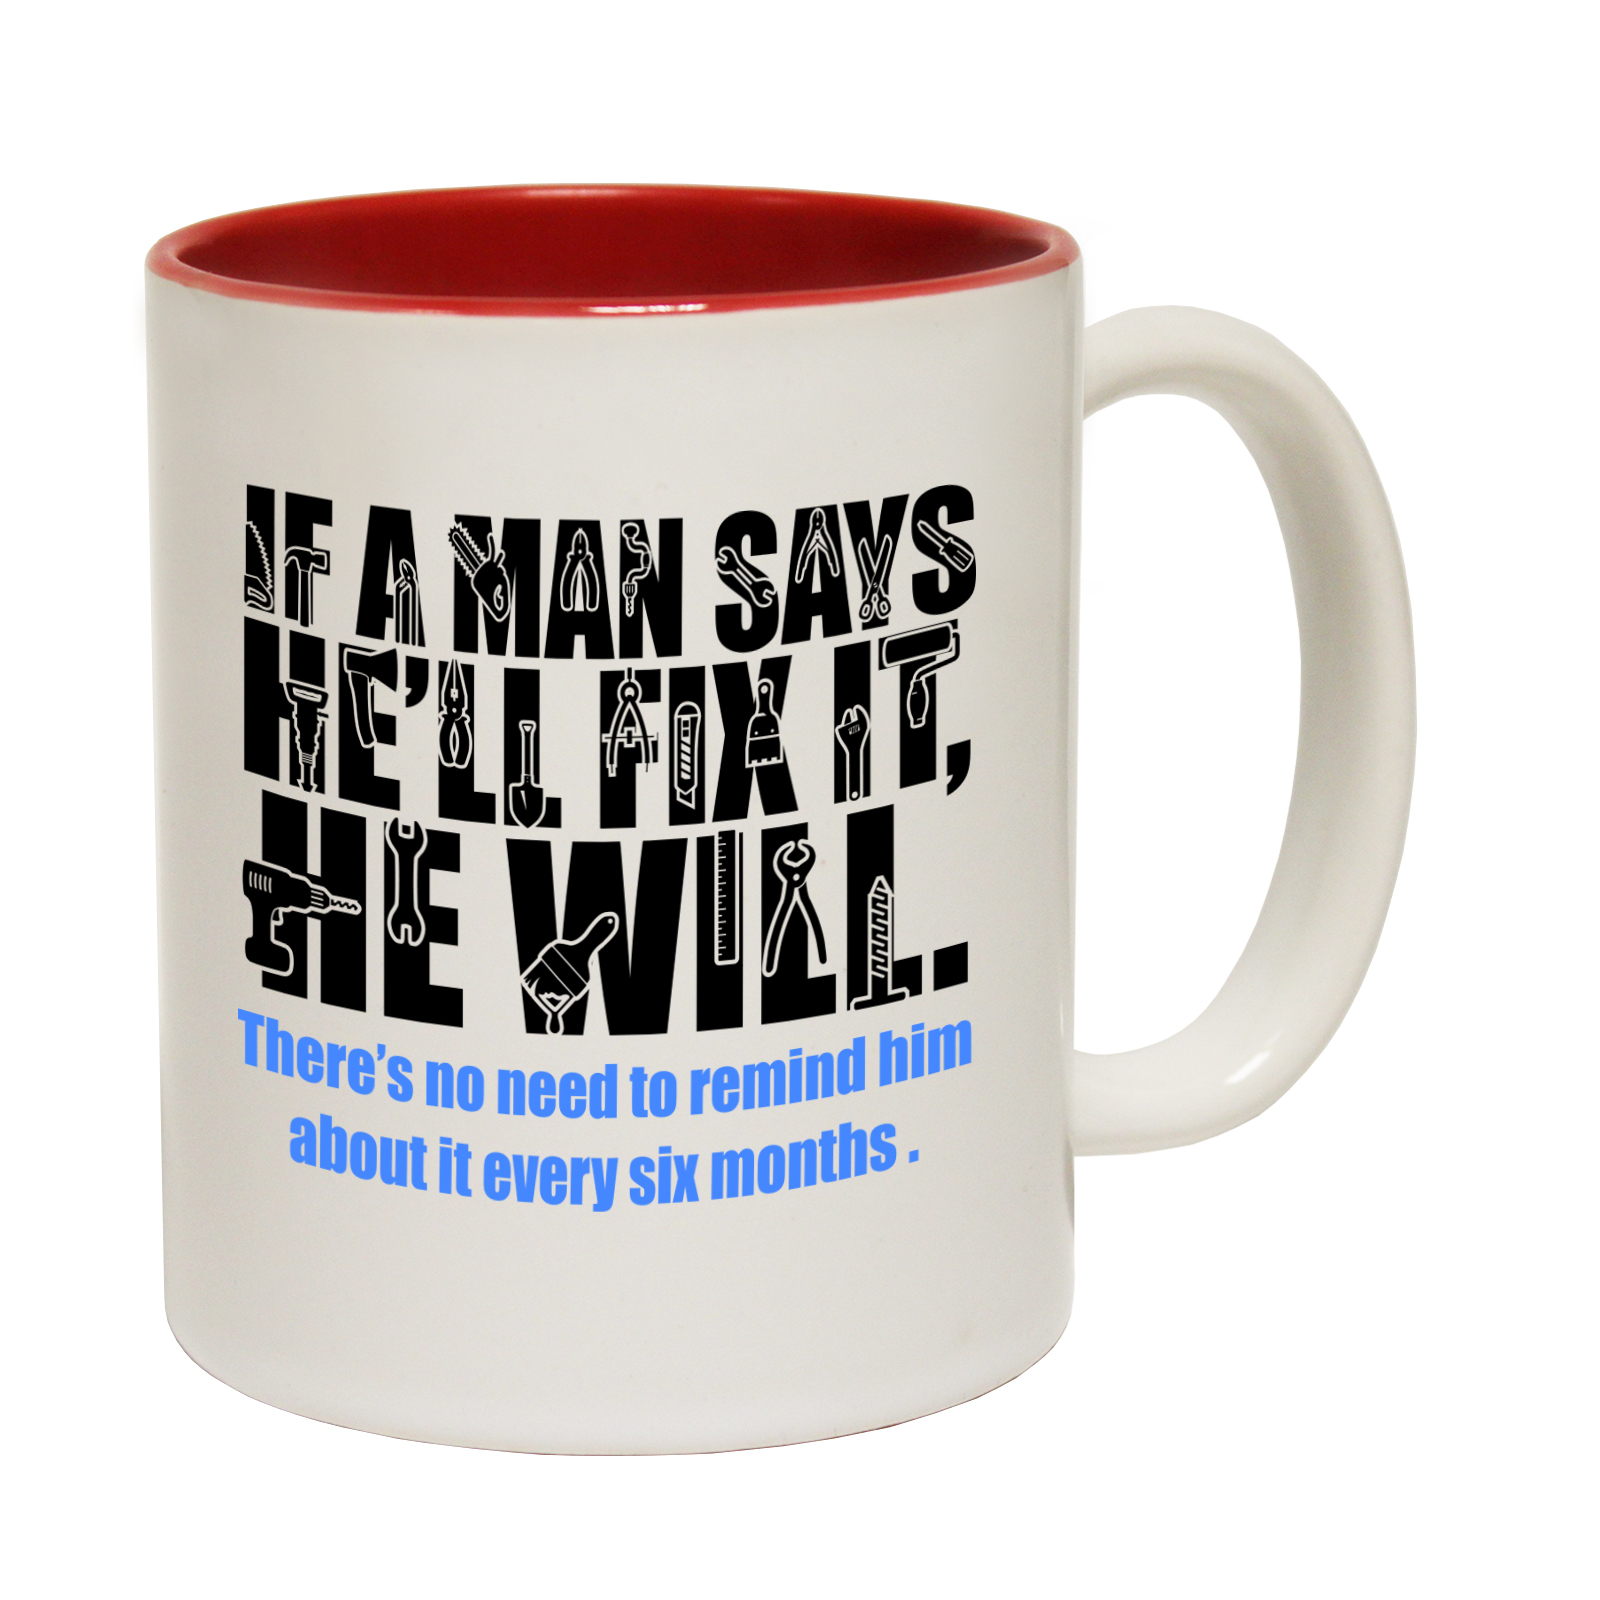 Funny Mugs - If A Man Says He'll Fix It He Will - Joke Gift Christmas  NOVELTY MU